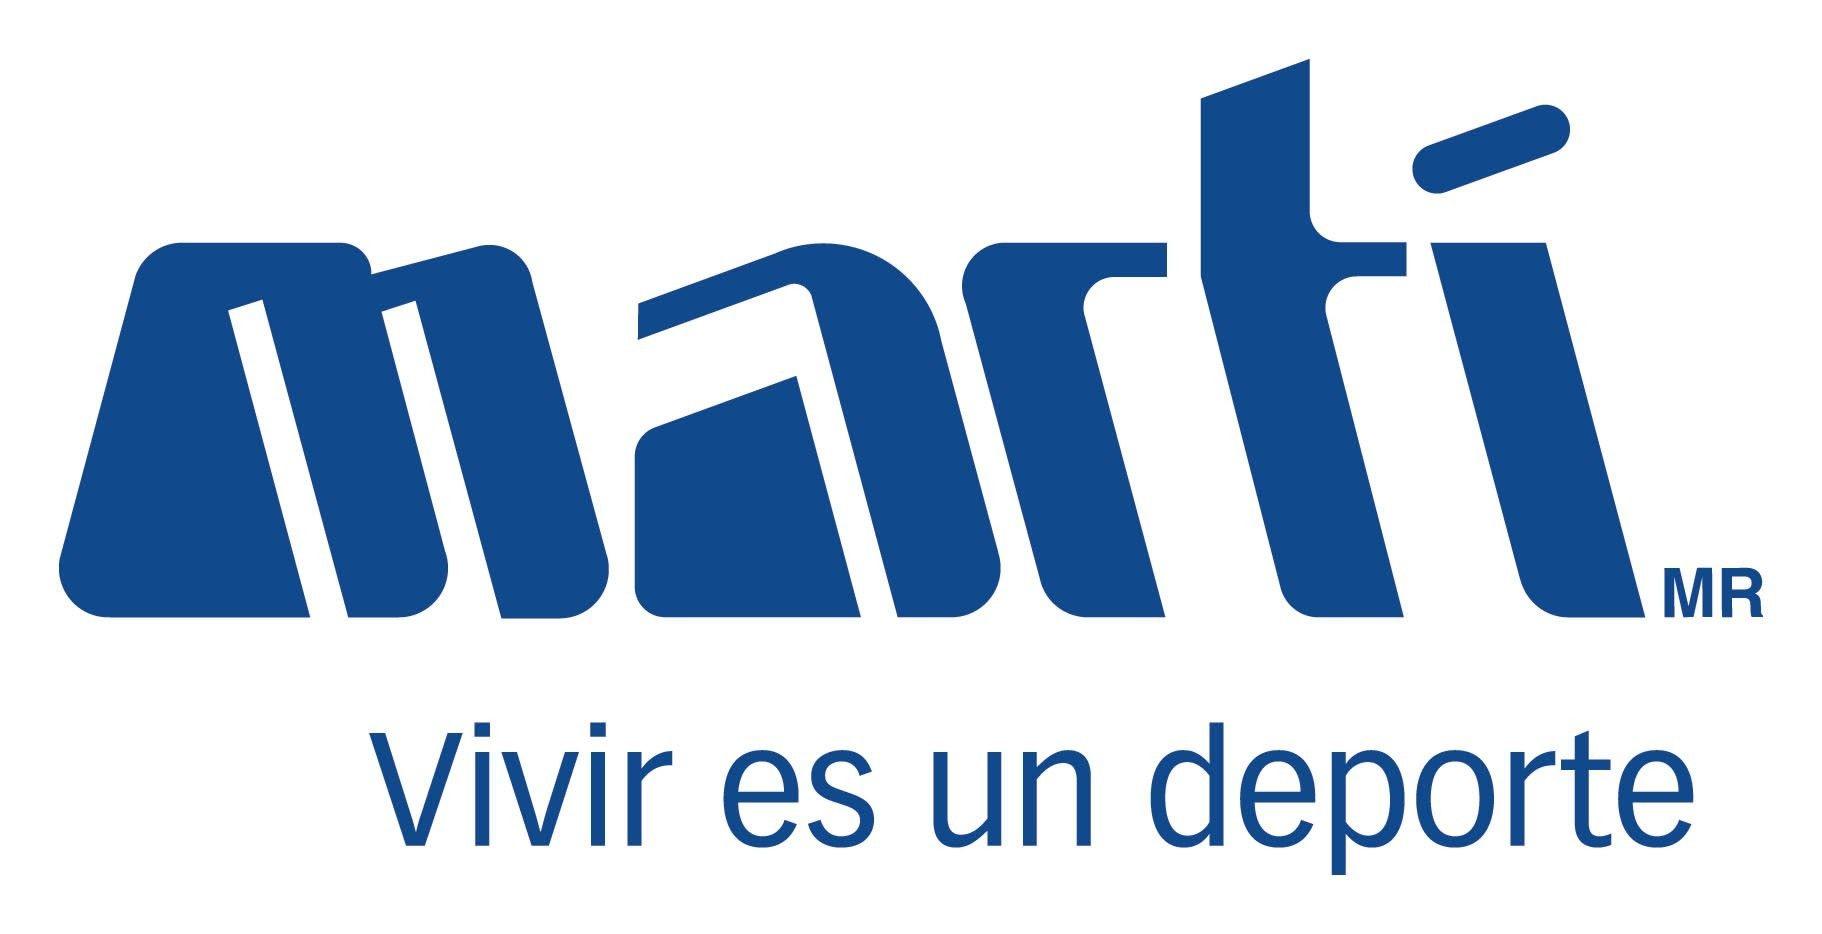 Marti Logo - Marti Logo Photo. About of logos